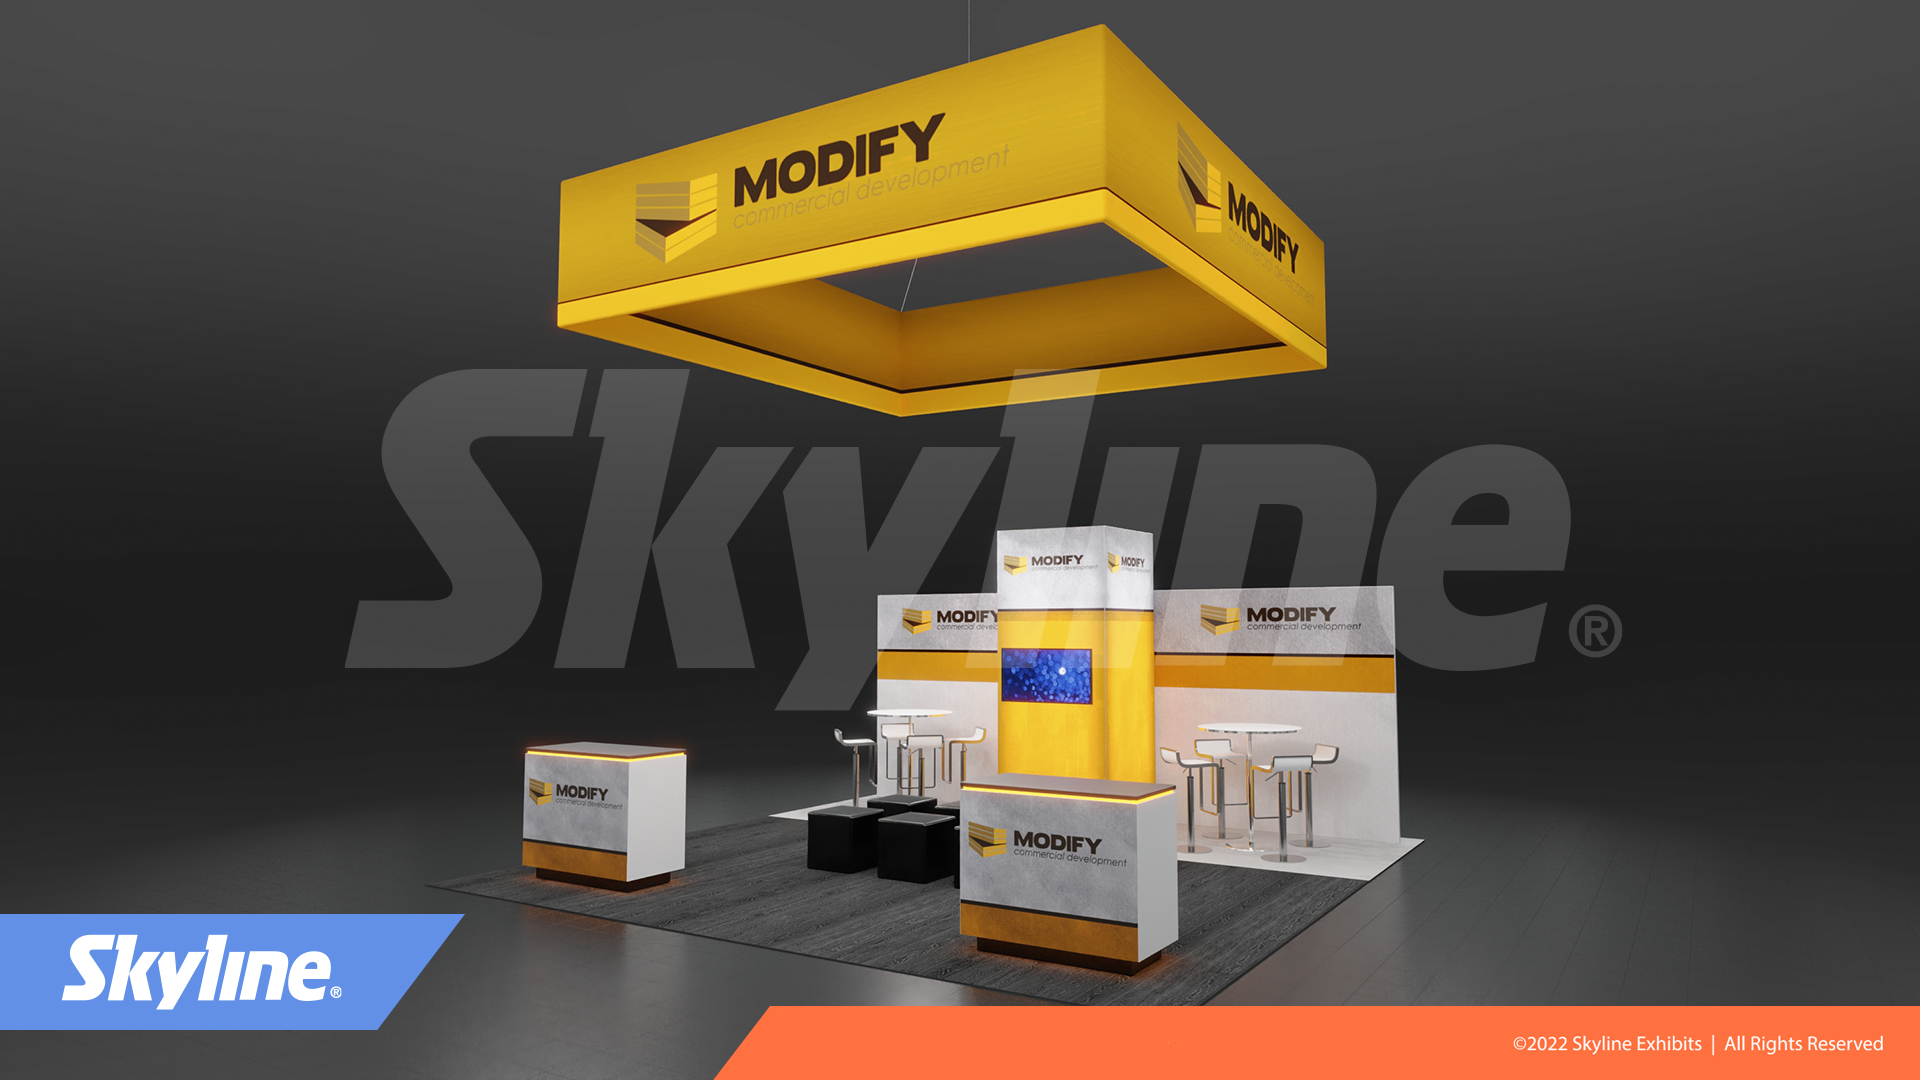 Modify Commercial Development #2